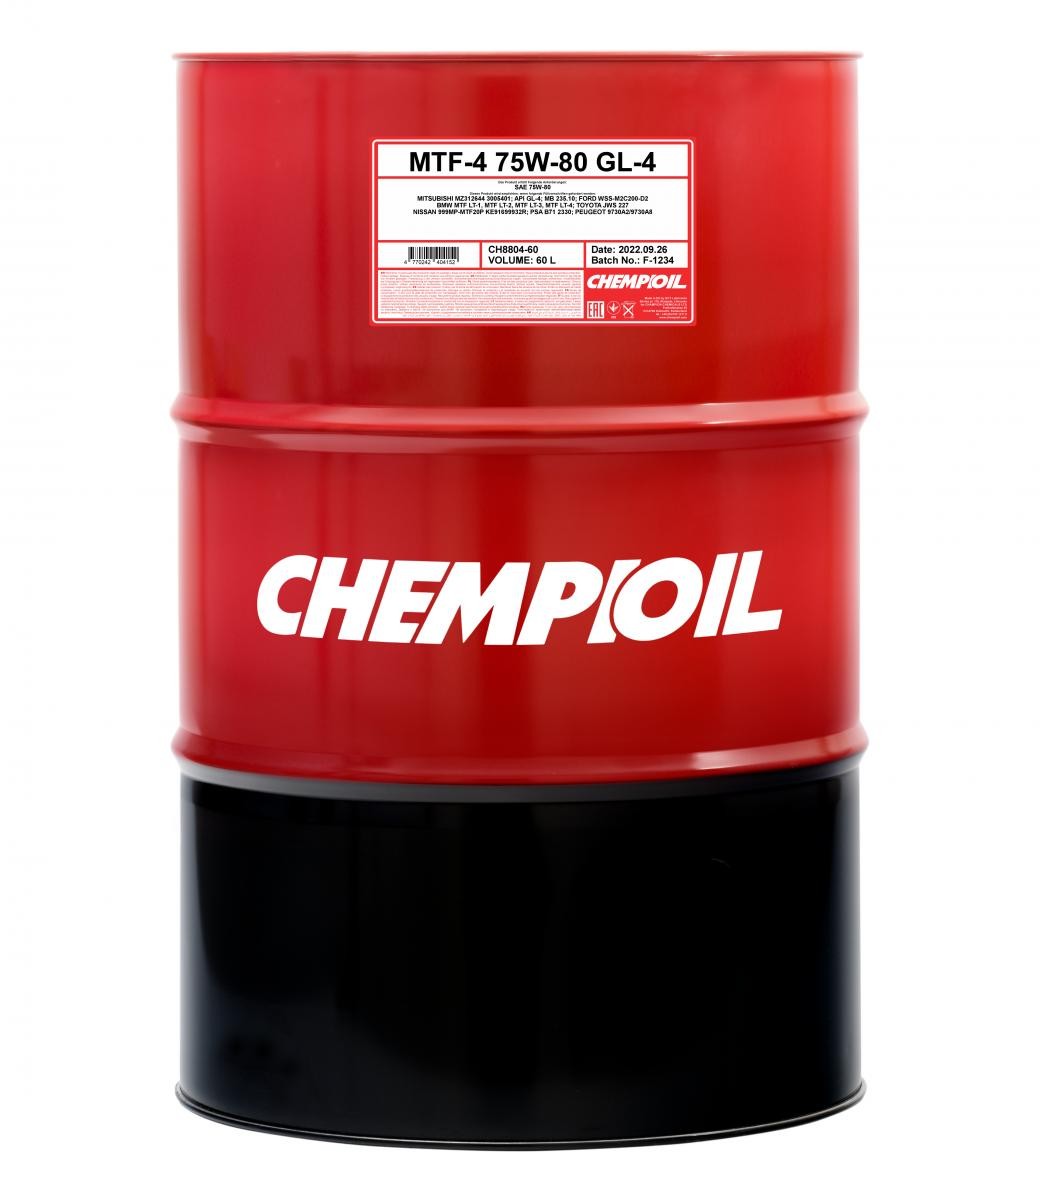 CHEMPIOIL MTF-4 CH8804-60 Transmission fluid MTFLT2